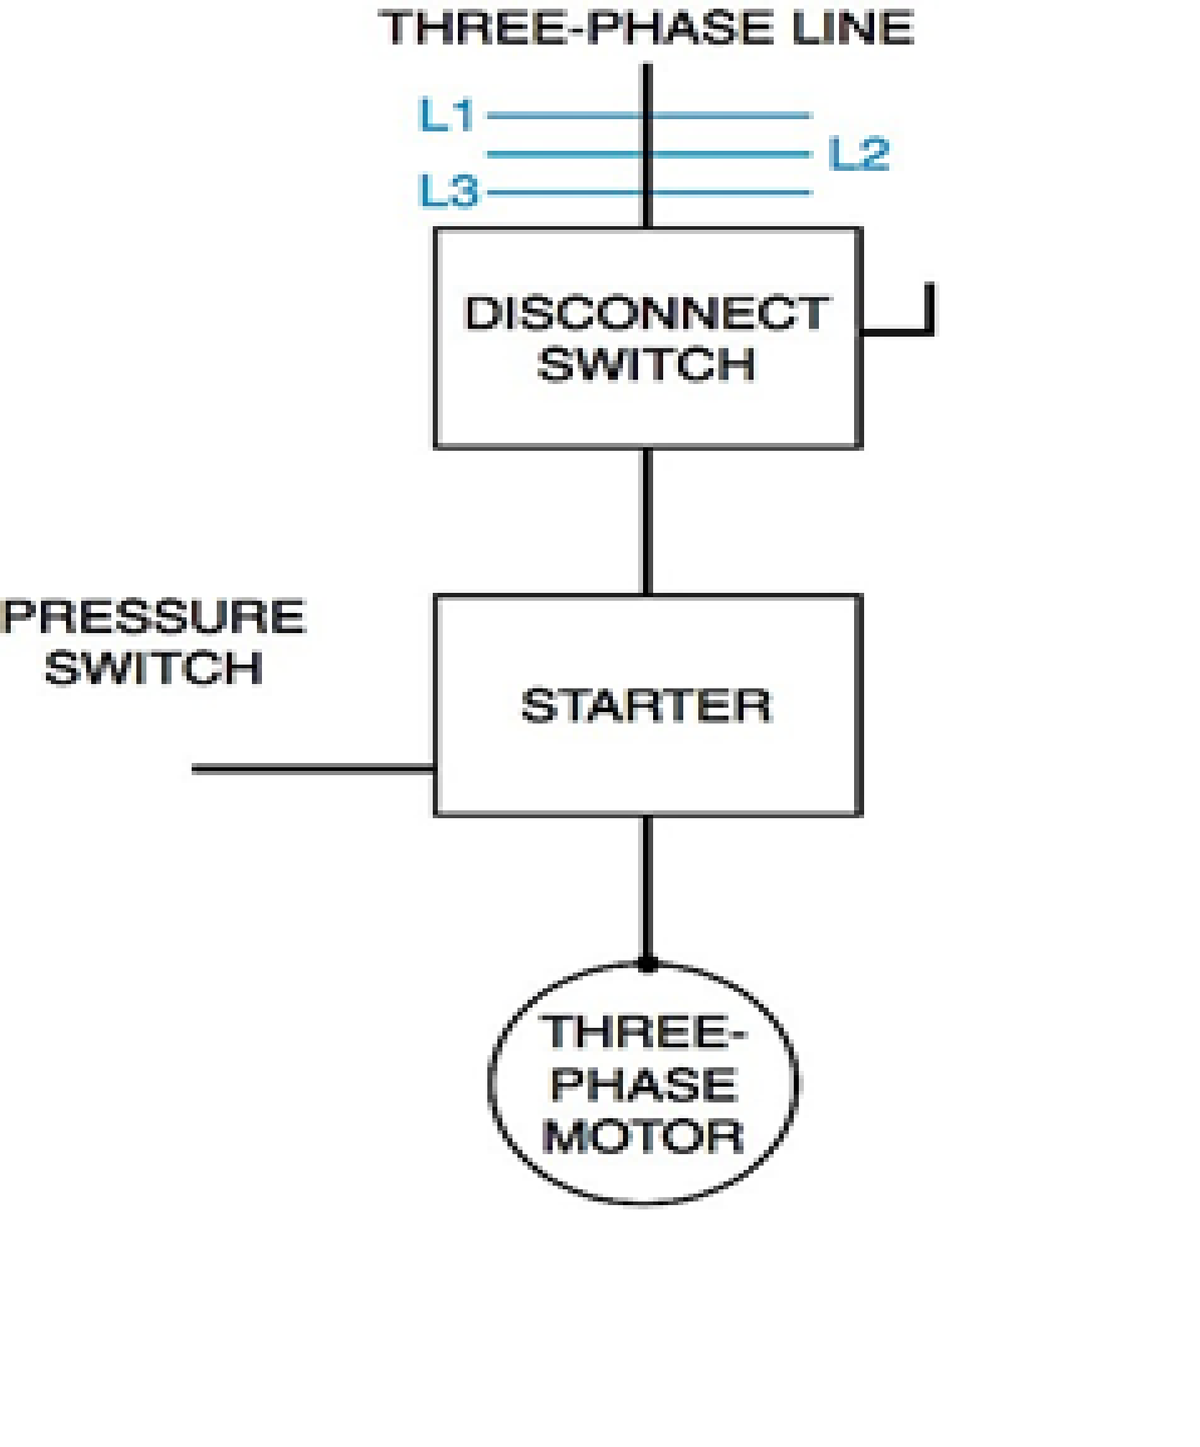 THREE-PHASE LINE
L1
L2
L3
DISCONNECT
SWITCH
PRESSURE
SWITCH
STARTER
THREE-
PHASE
МOTOR
